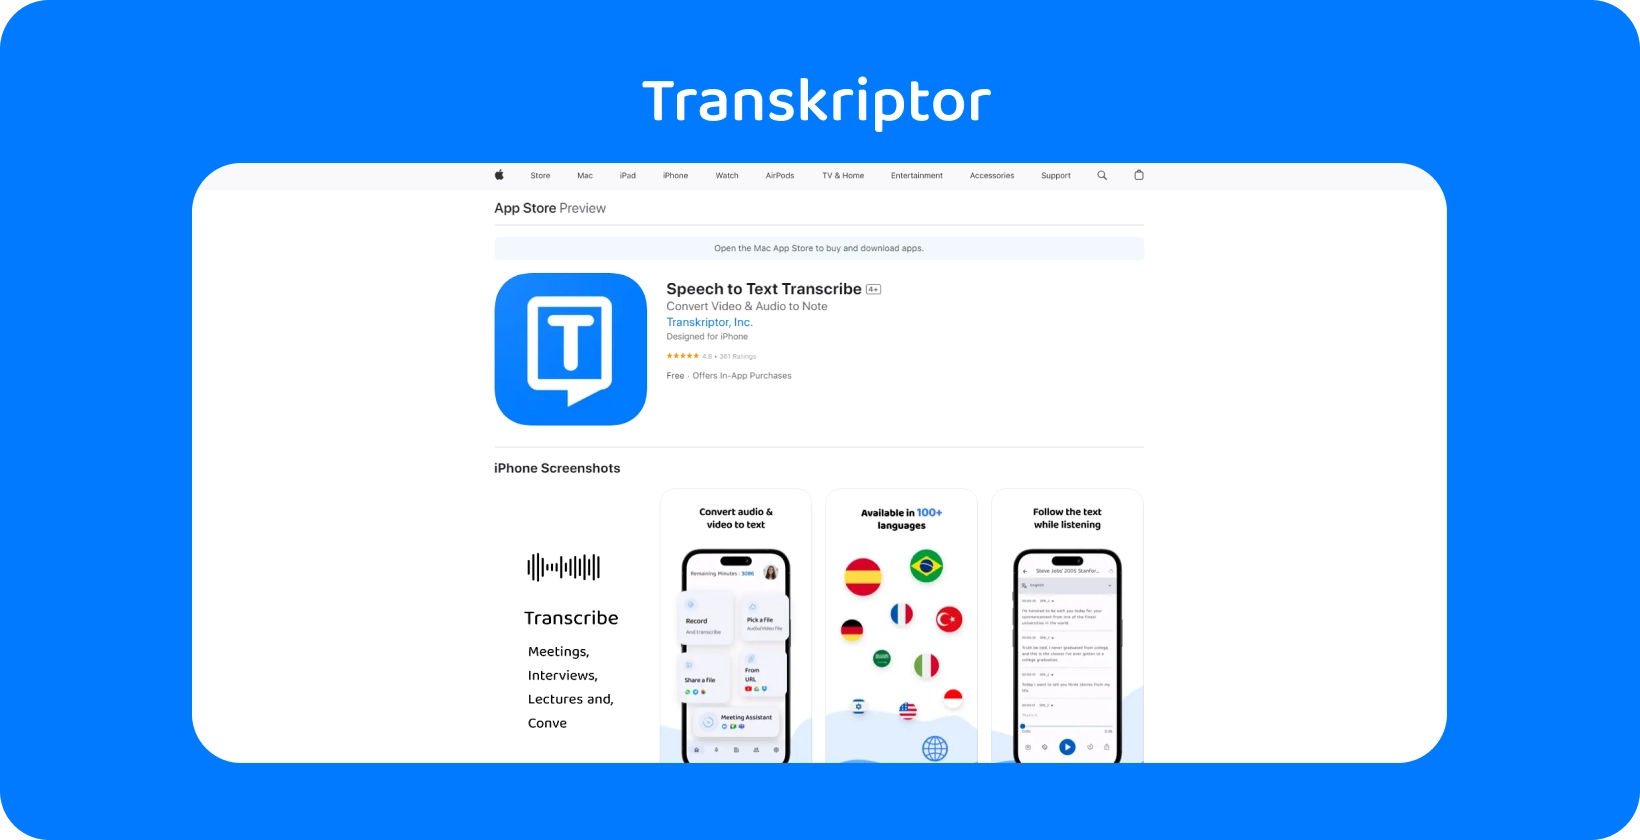 Transkriptor application showcased on iPhone, highlighting its speech-to-text transcription capabilities.